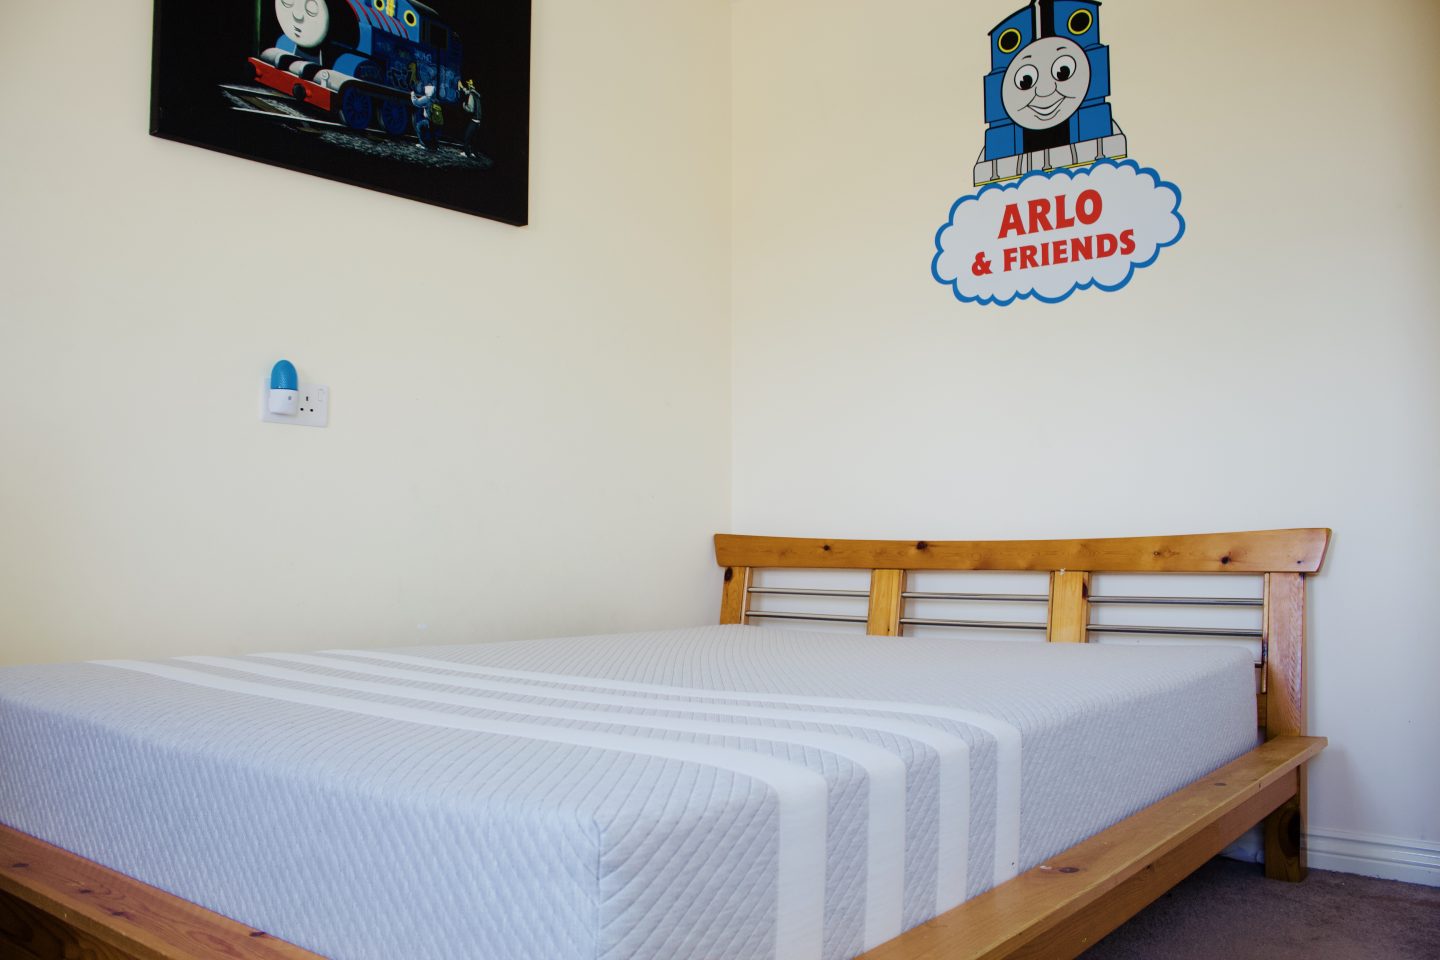 Leesa mattress review plus £100 discount code